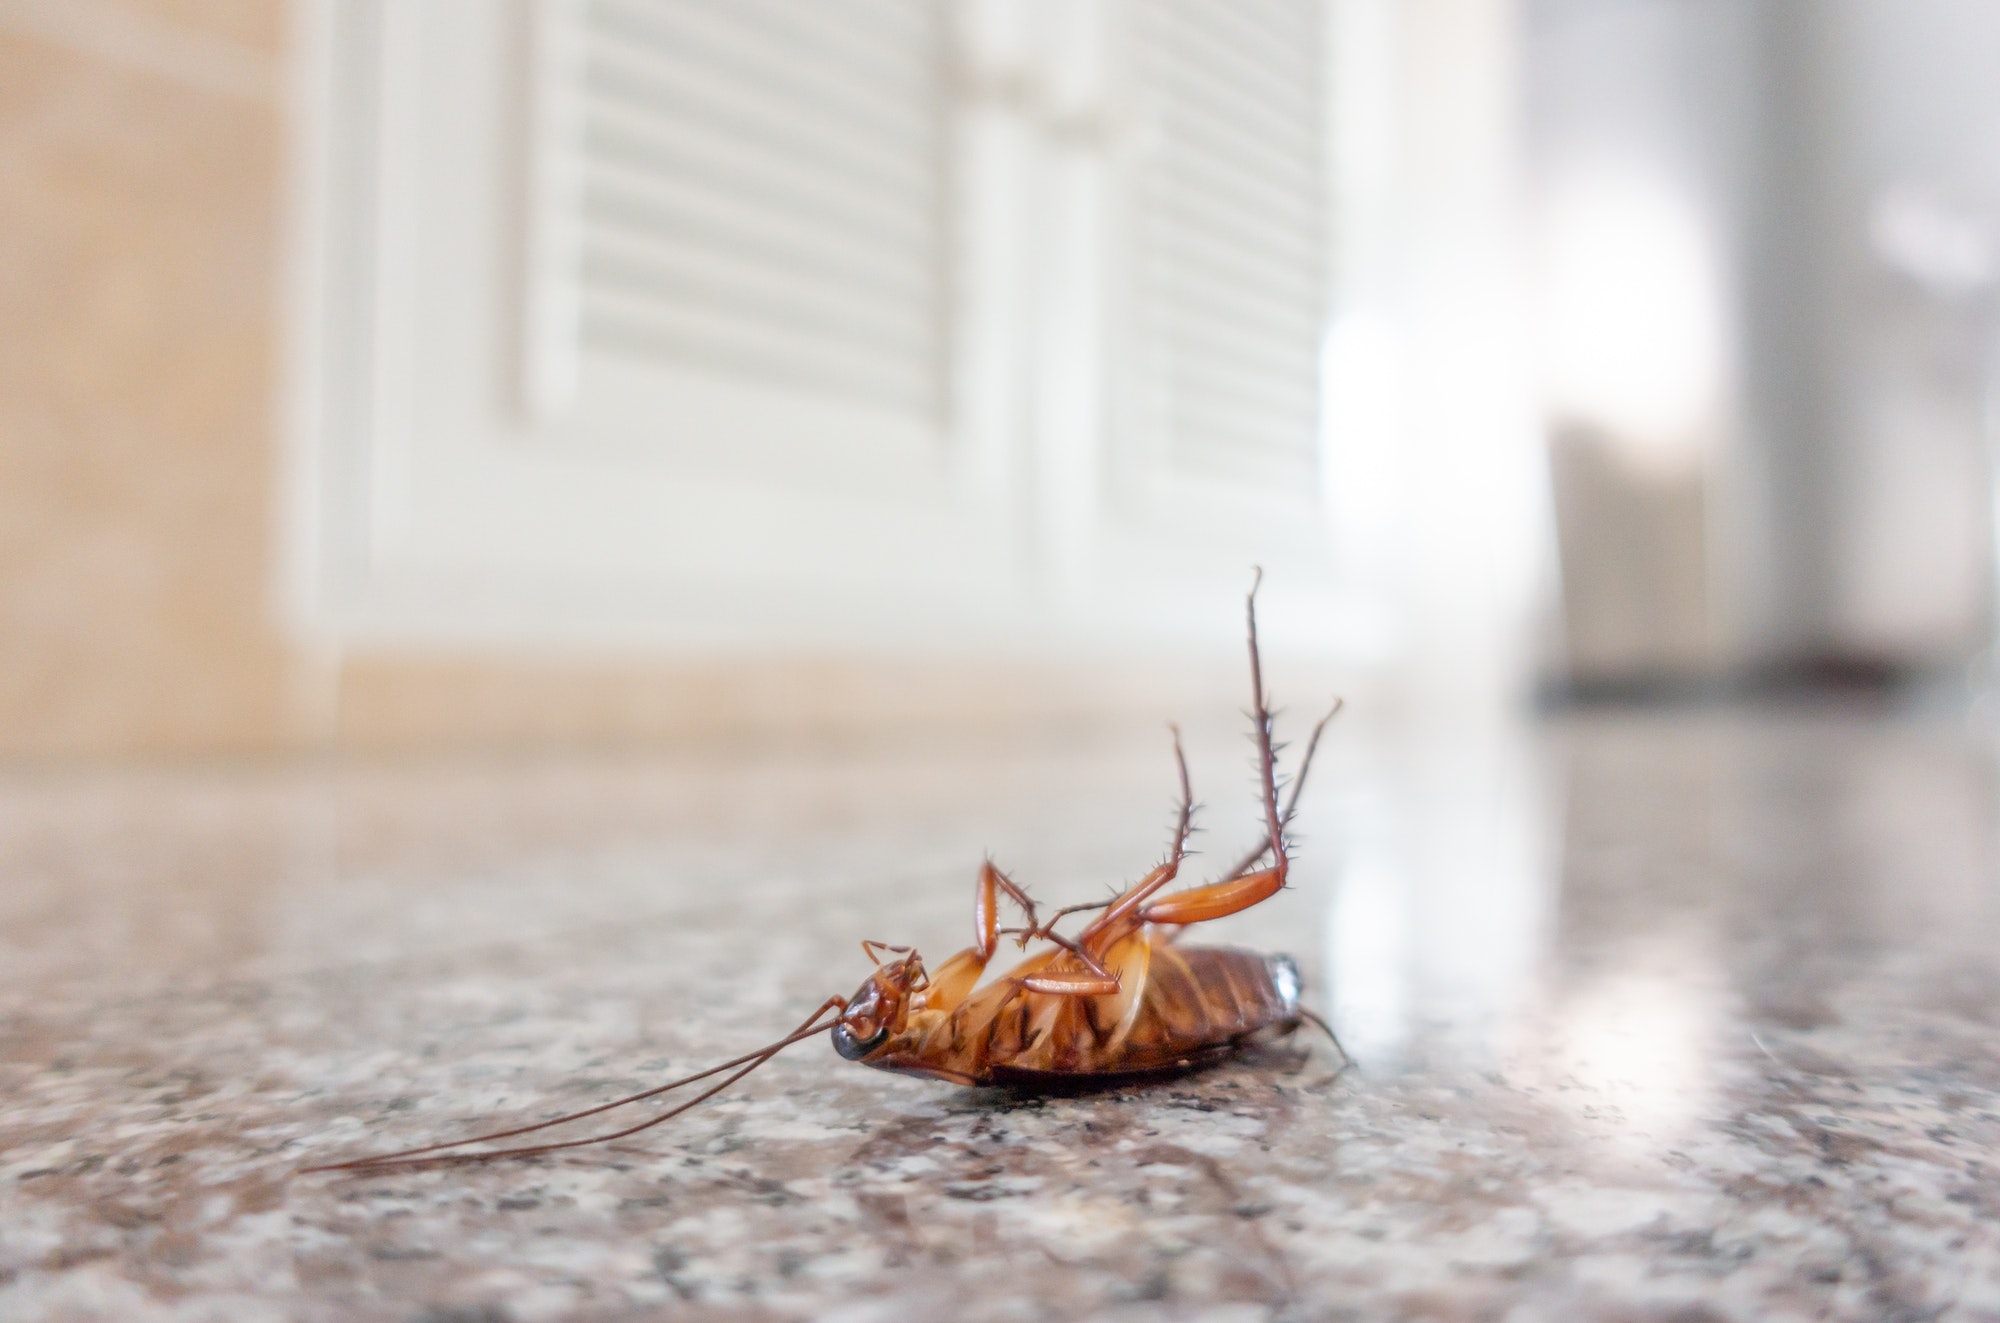 Dead cockroach on floor